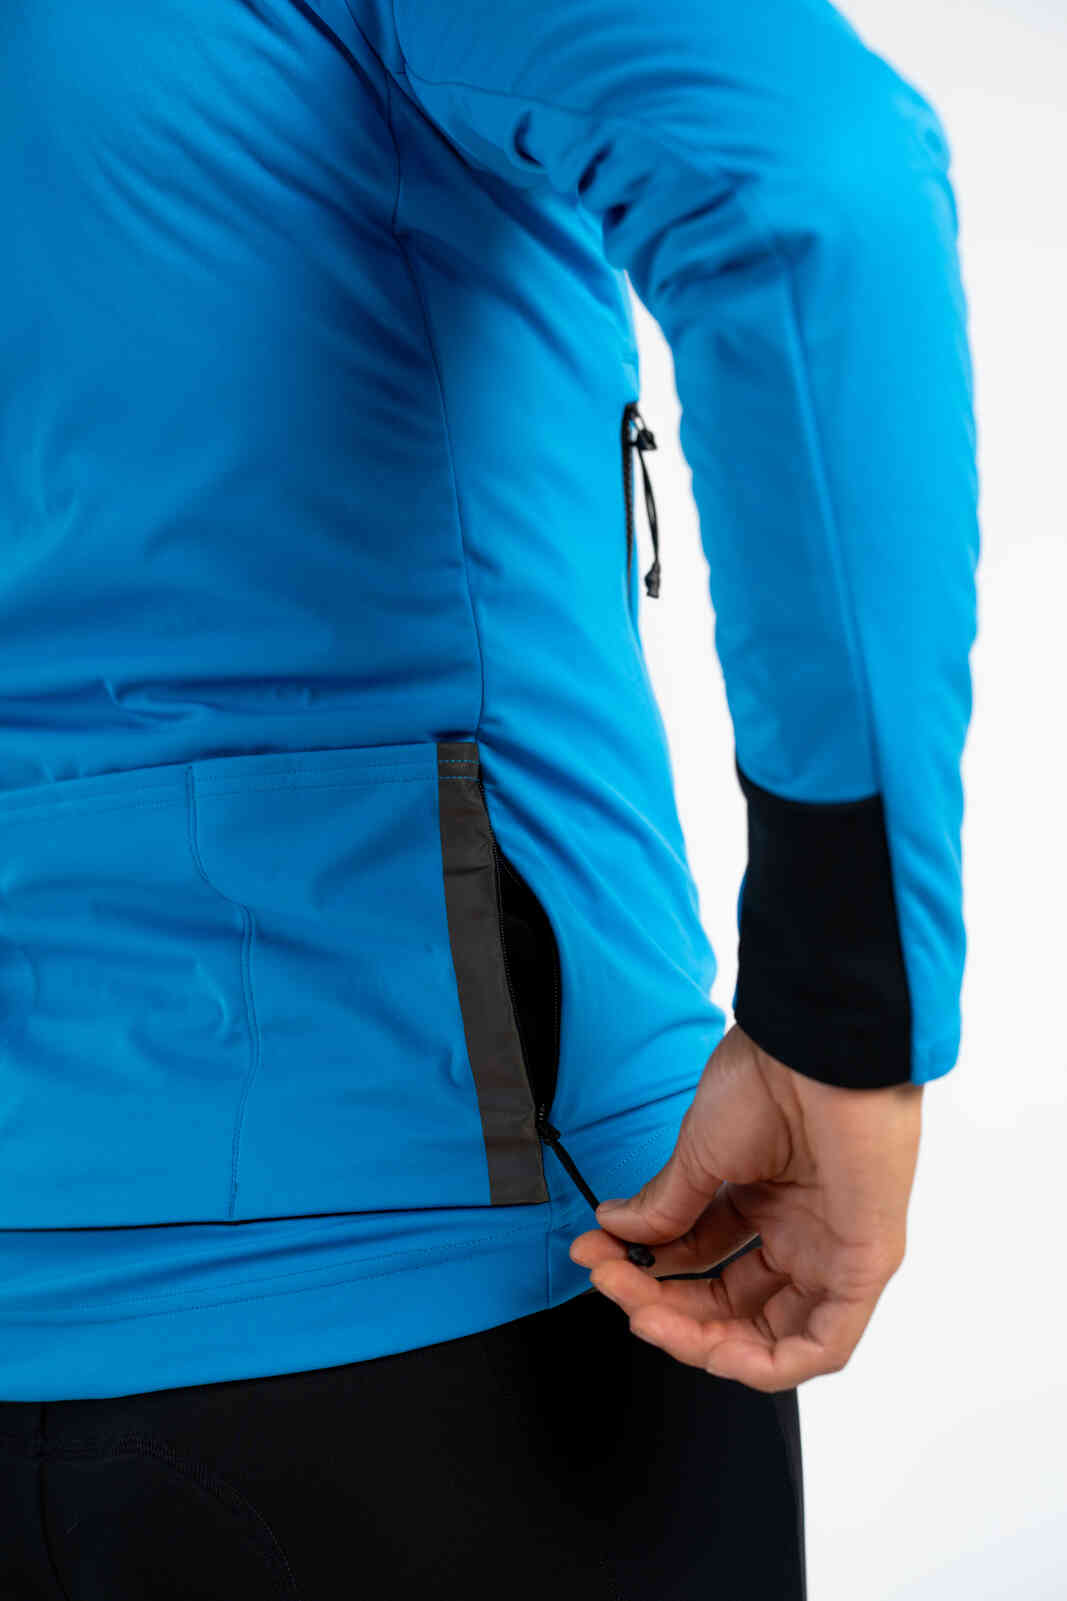 Women's Blue Winter Cycling Jacket - Zippered Valuables Pocket